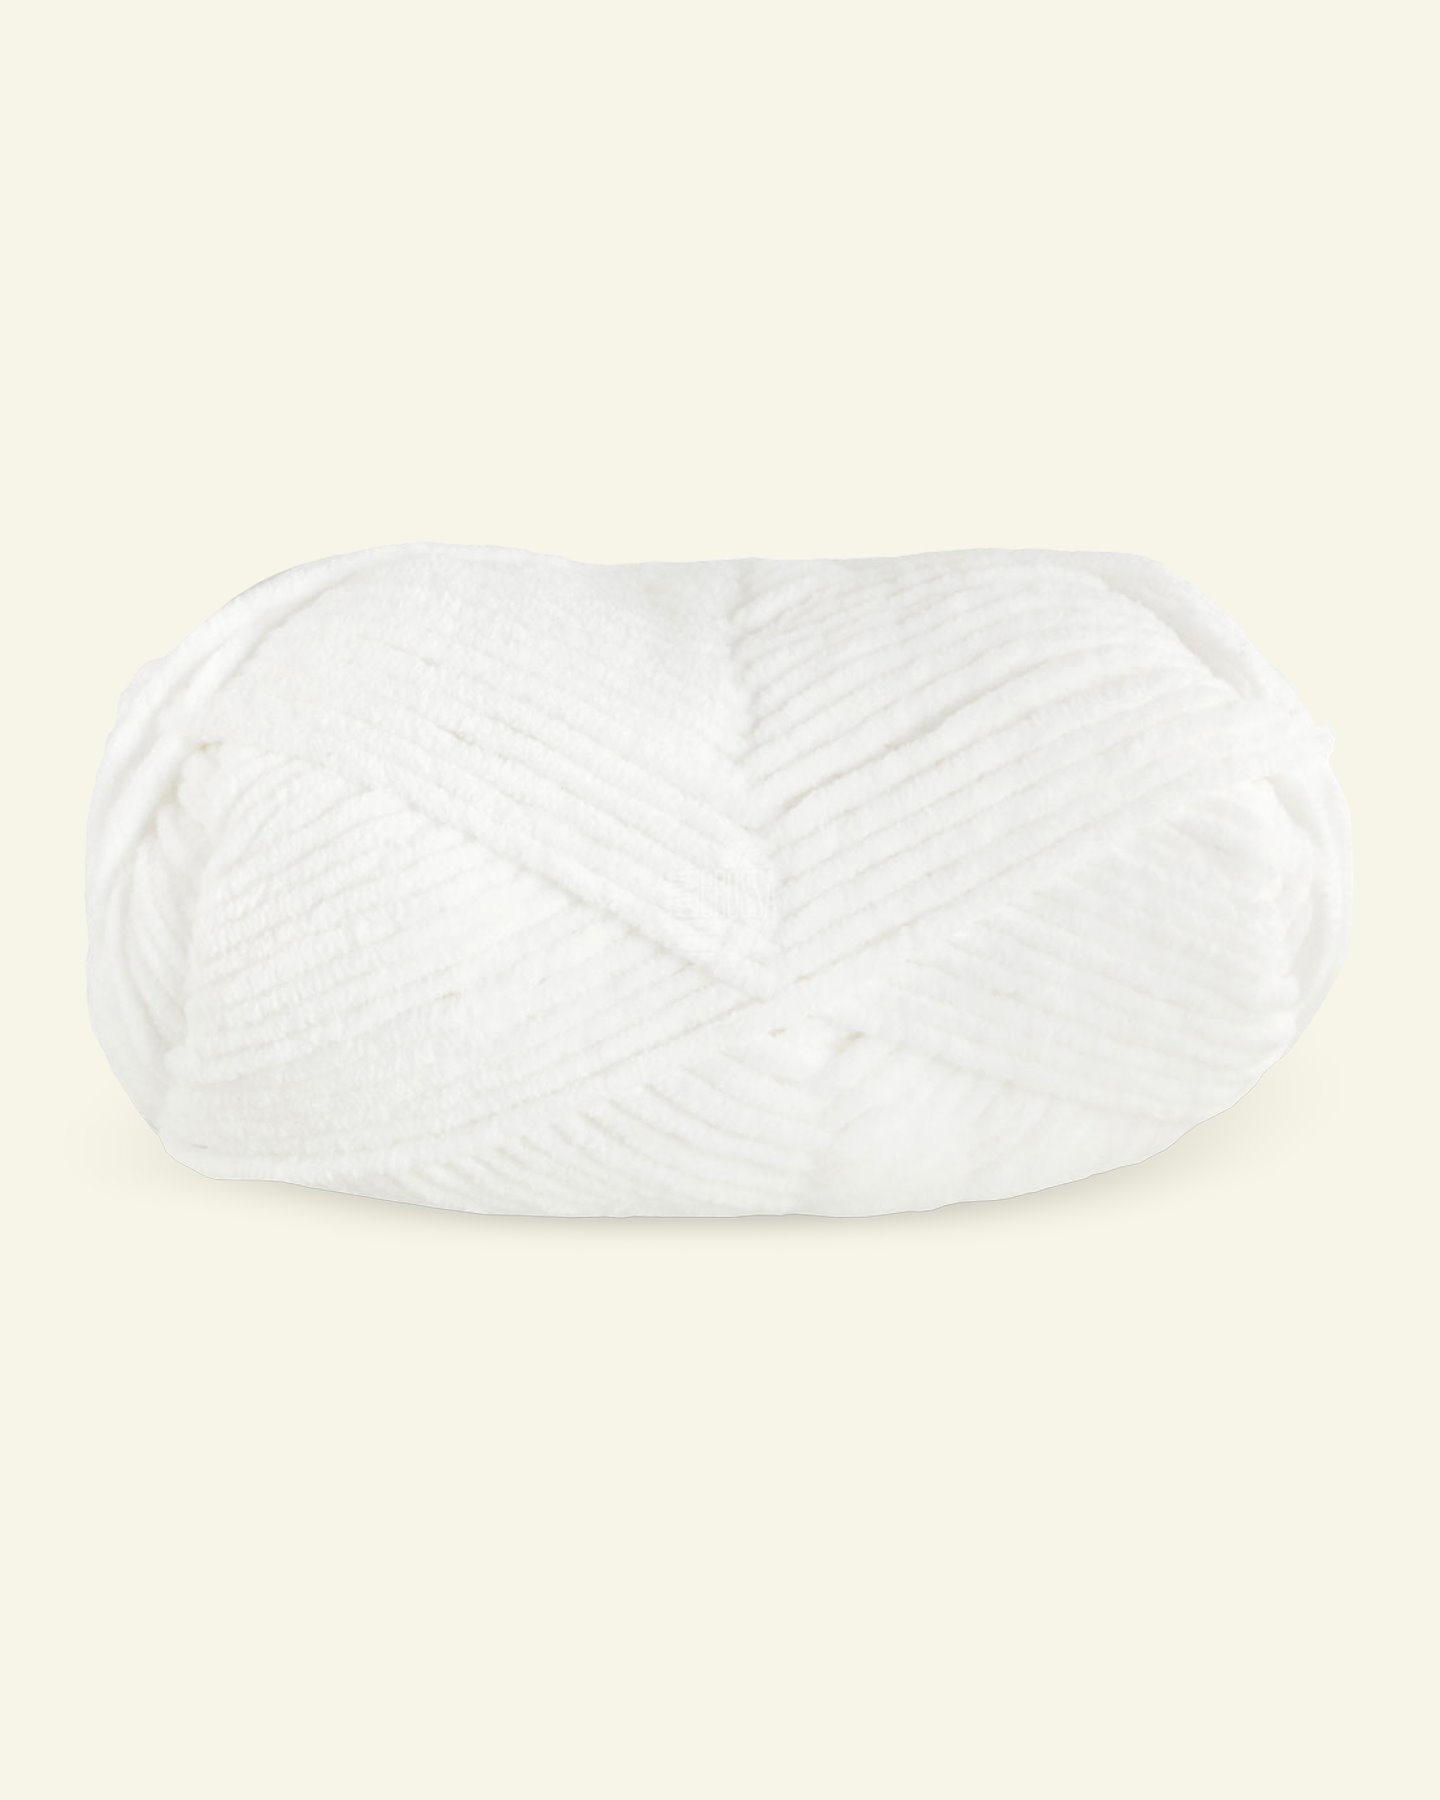 Lana Grossa, polyester yarn / velour yarn "The Look", white 90001139_pack